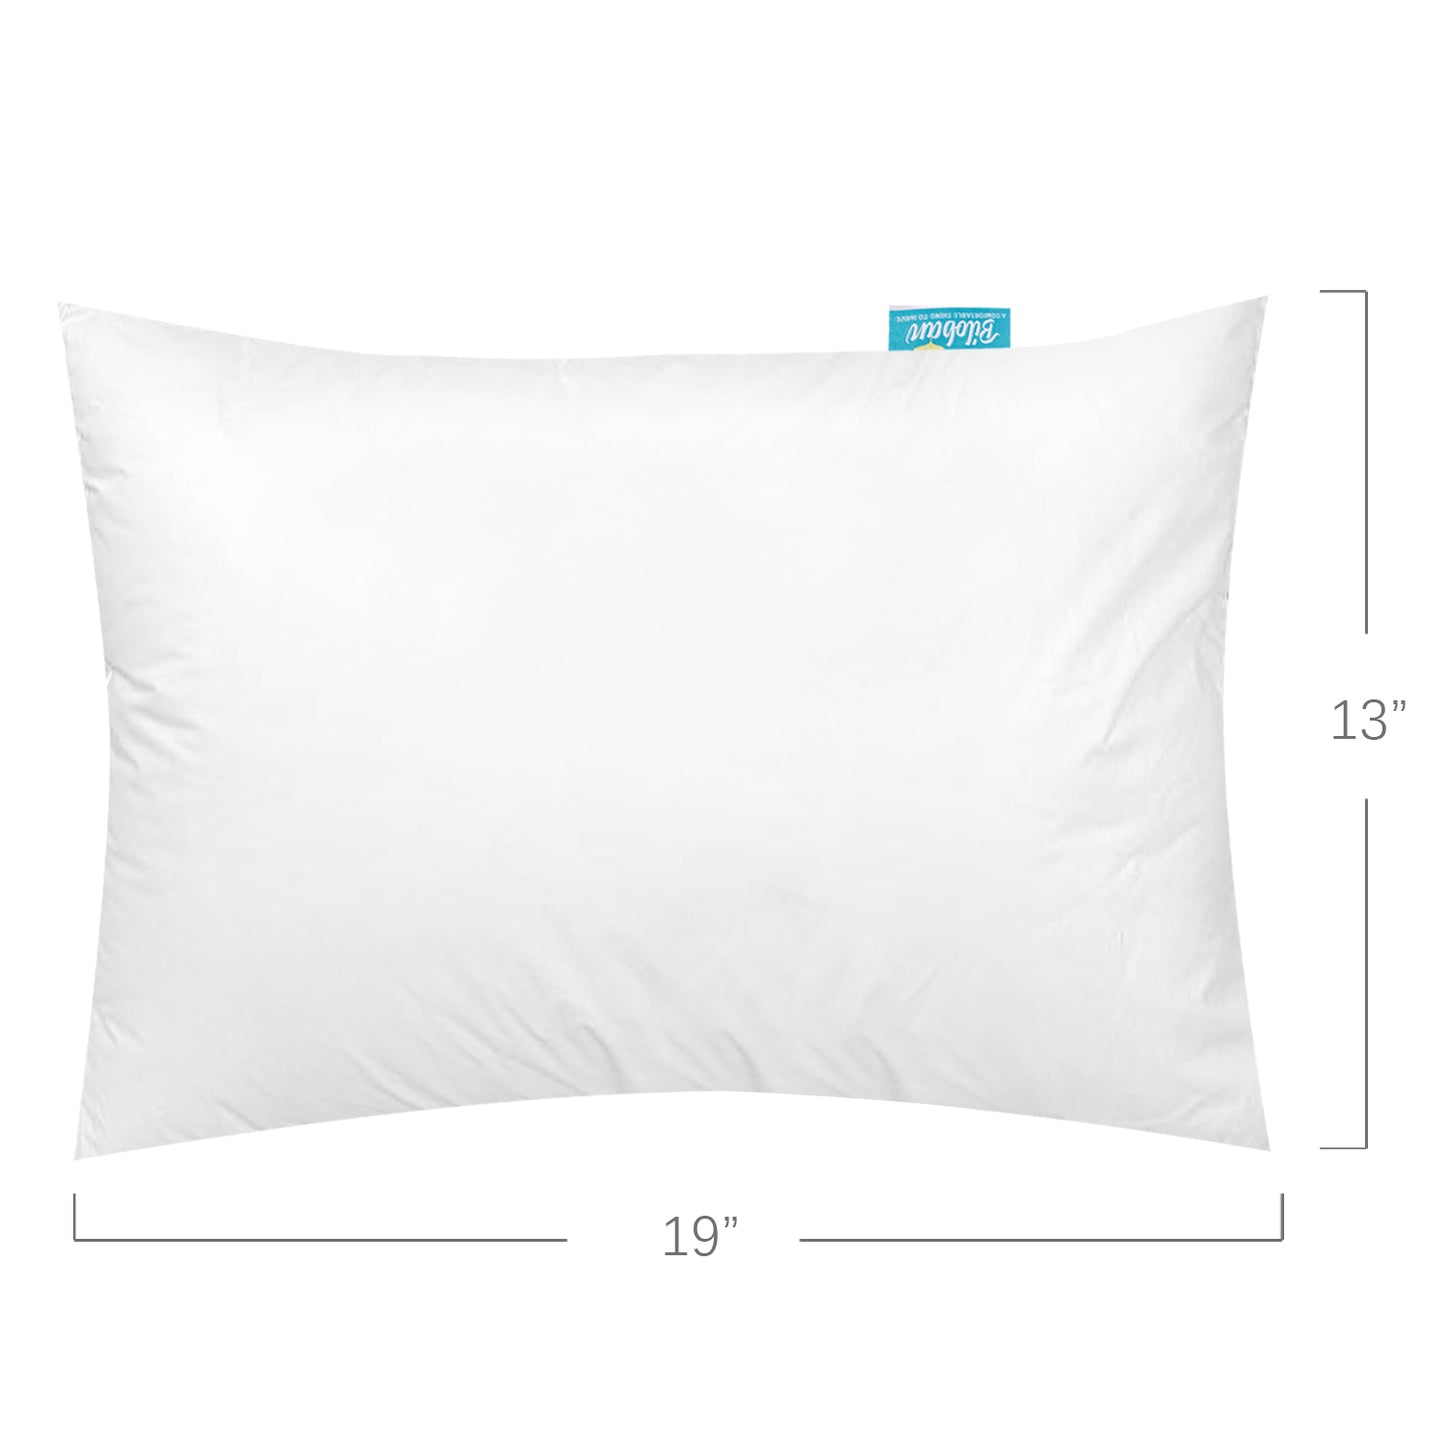 Toddler Pillowcase- 2 Pack, 100% Cotton, 12" x 16", 13" x 18", 14" x 19", White - Biloban Online Store